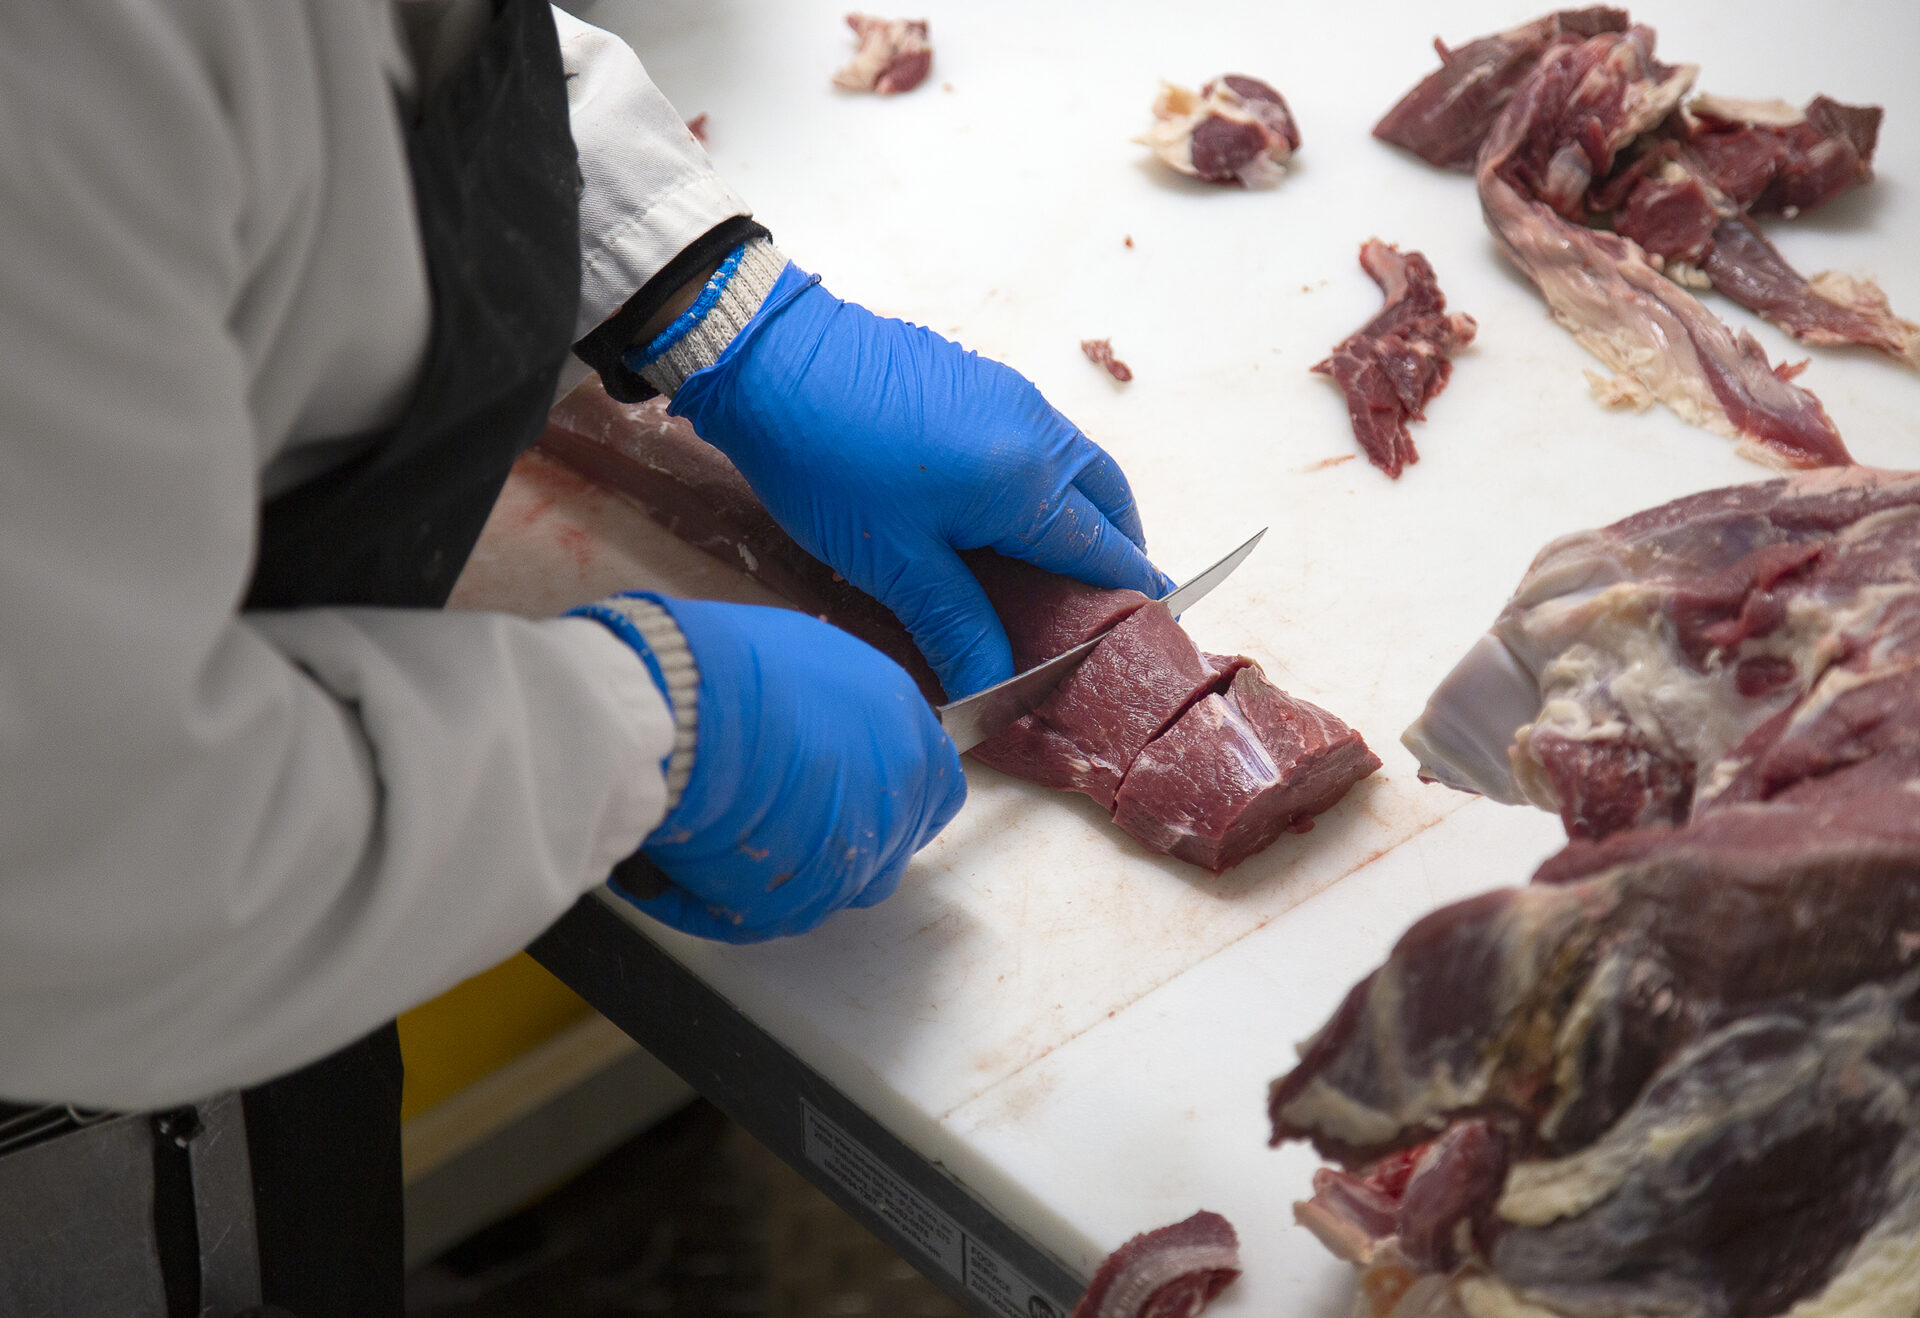 A butcher cuts filet mignon steaks from the tenderloin of a beef carcass.